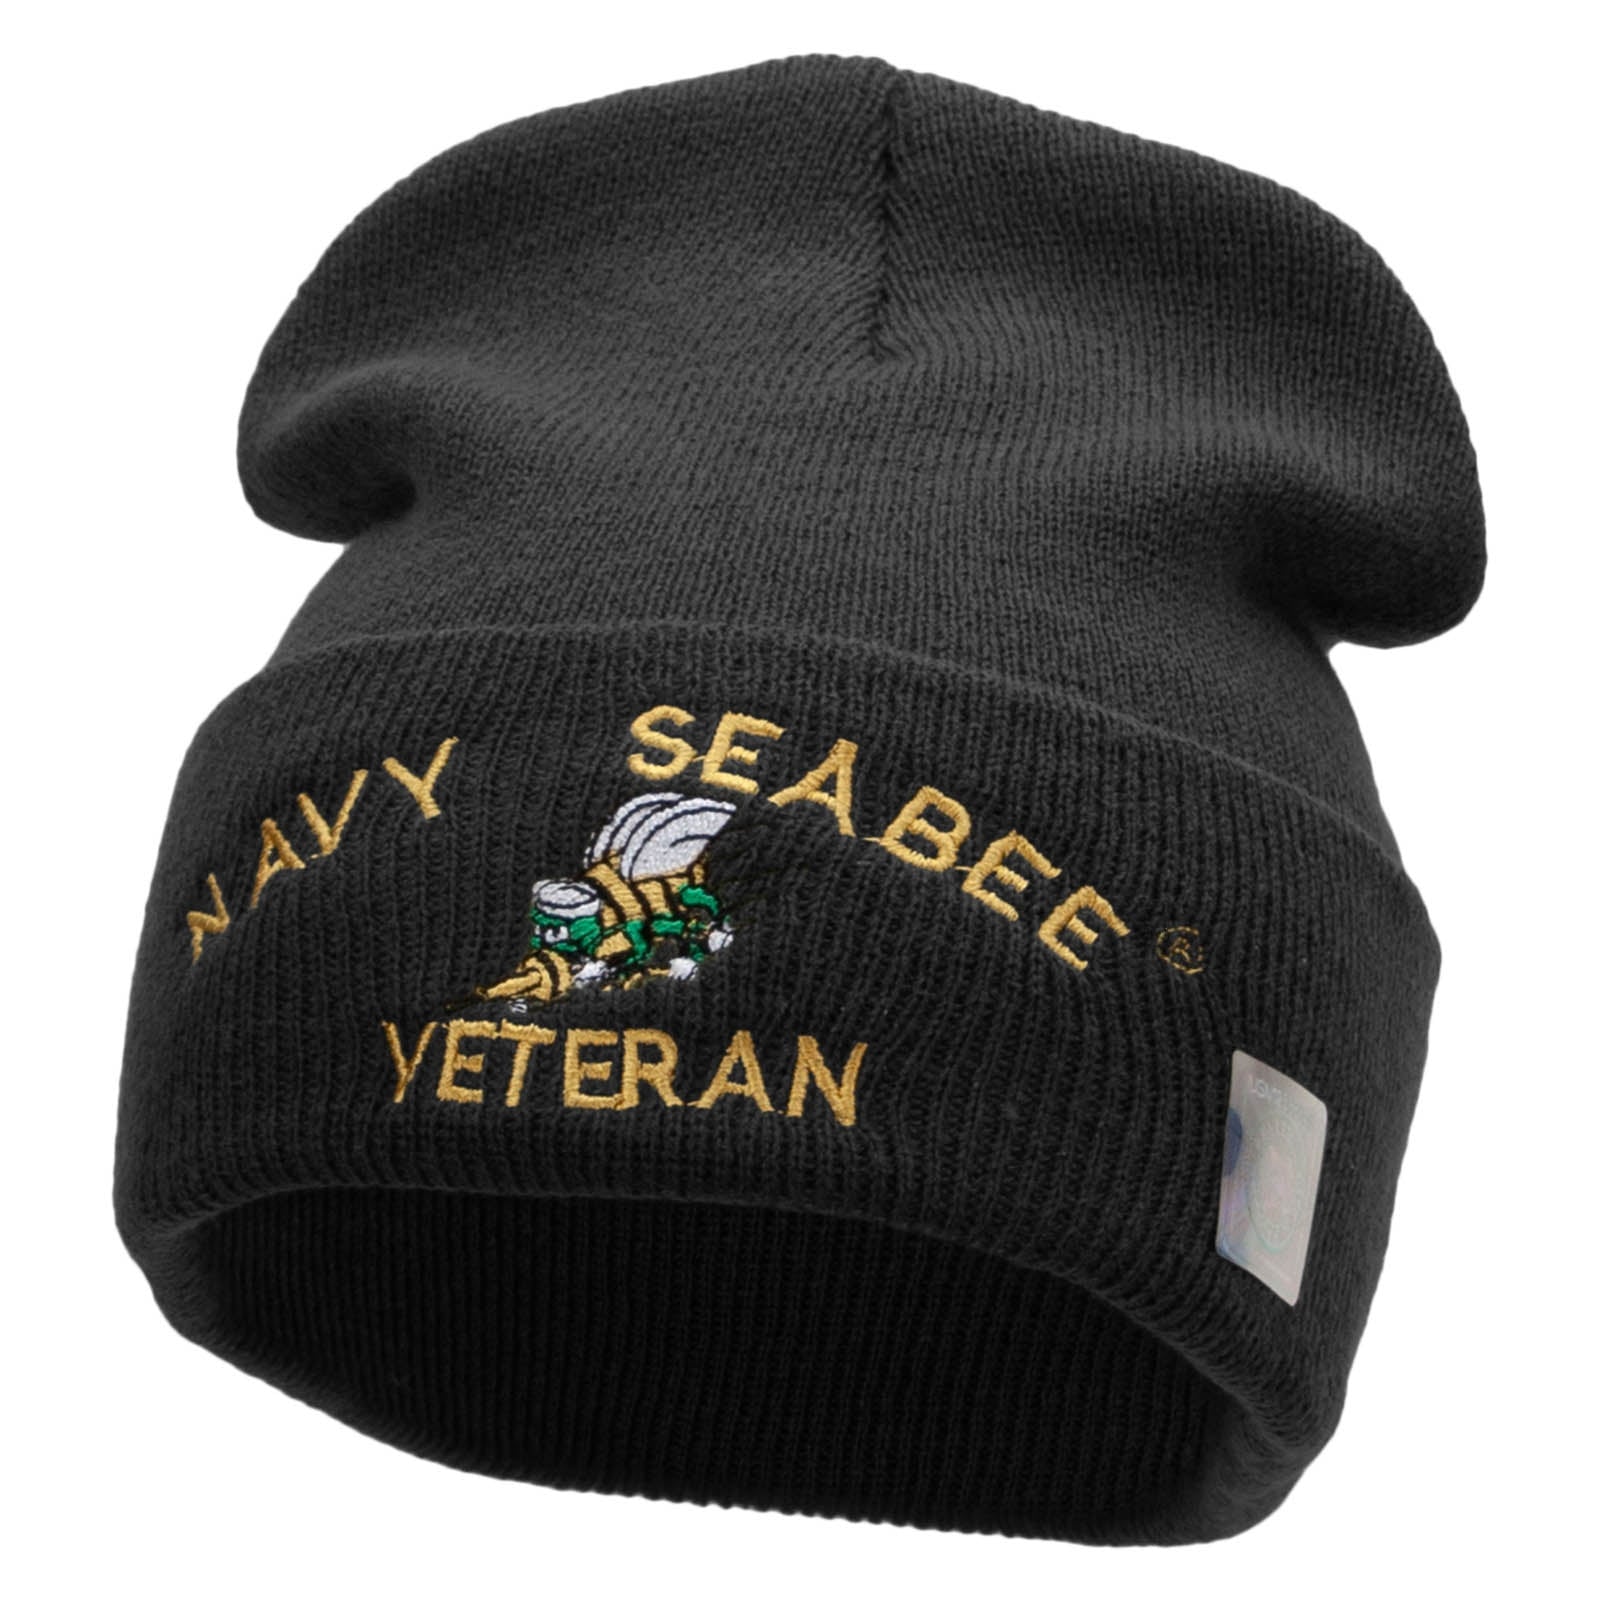 Licensed Navy Seabee Veteran Logo Embroidered Long Beanie Made in USA - Black OSFM